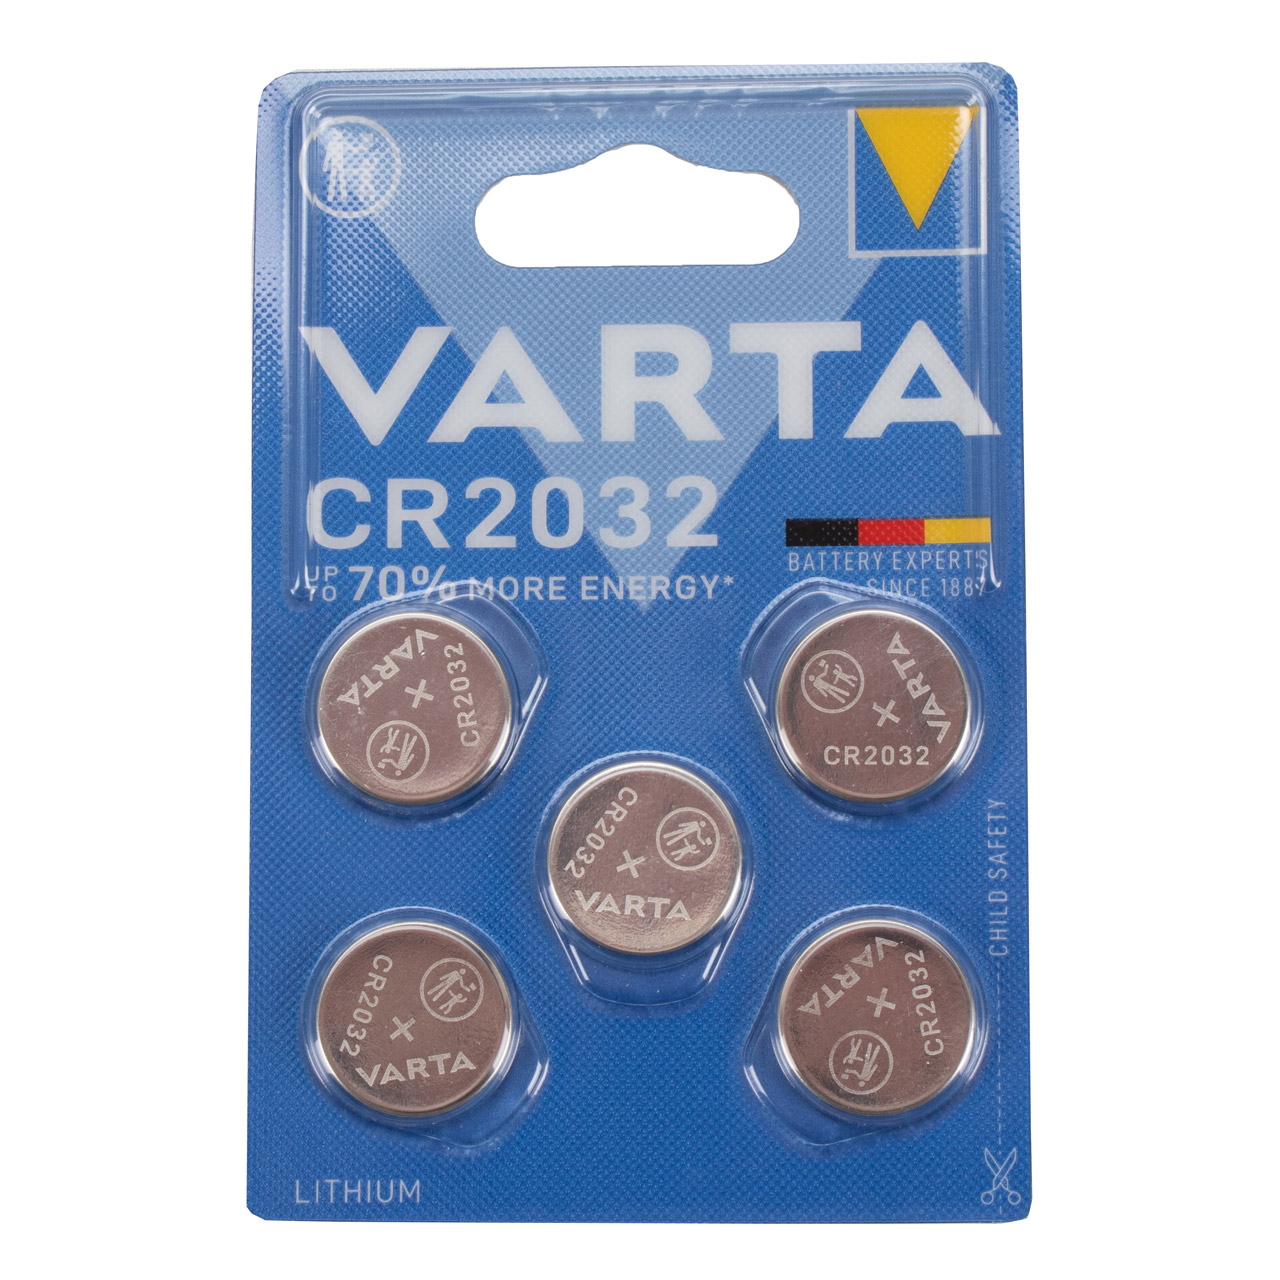 VARTA Batterien / Knopfzellen - 06032101415 